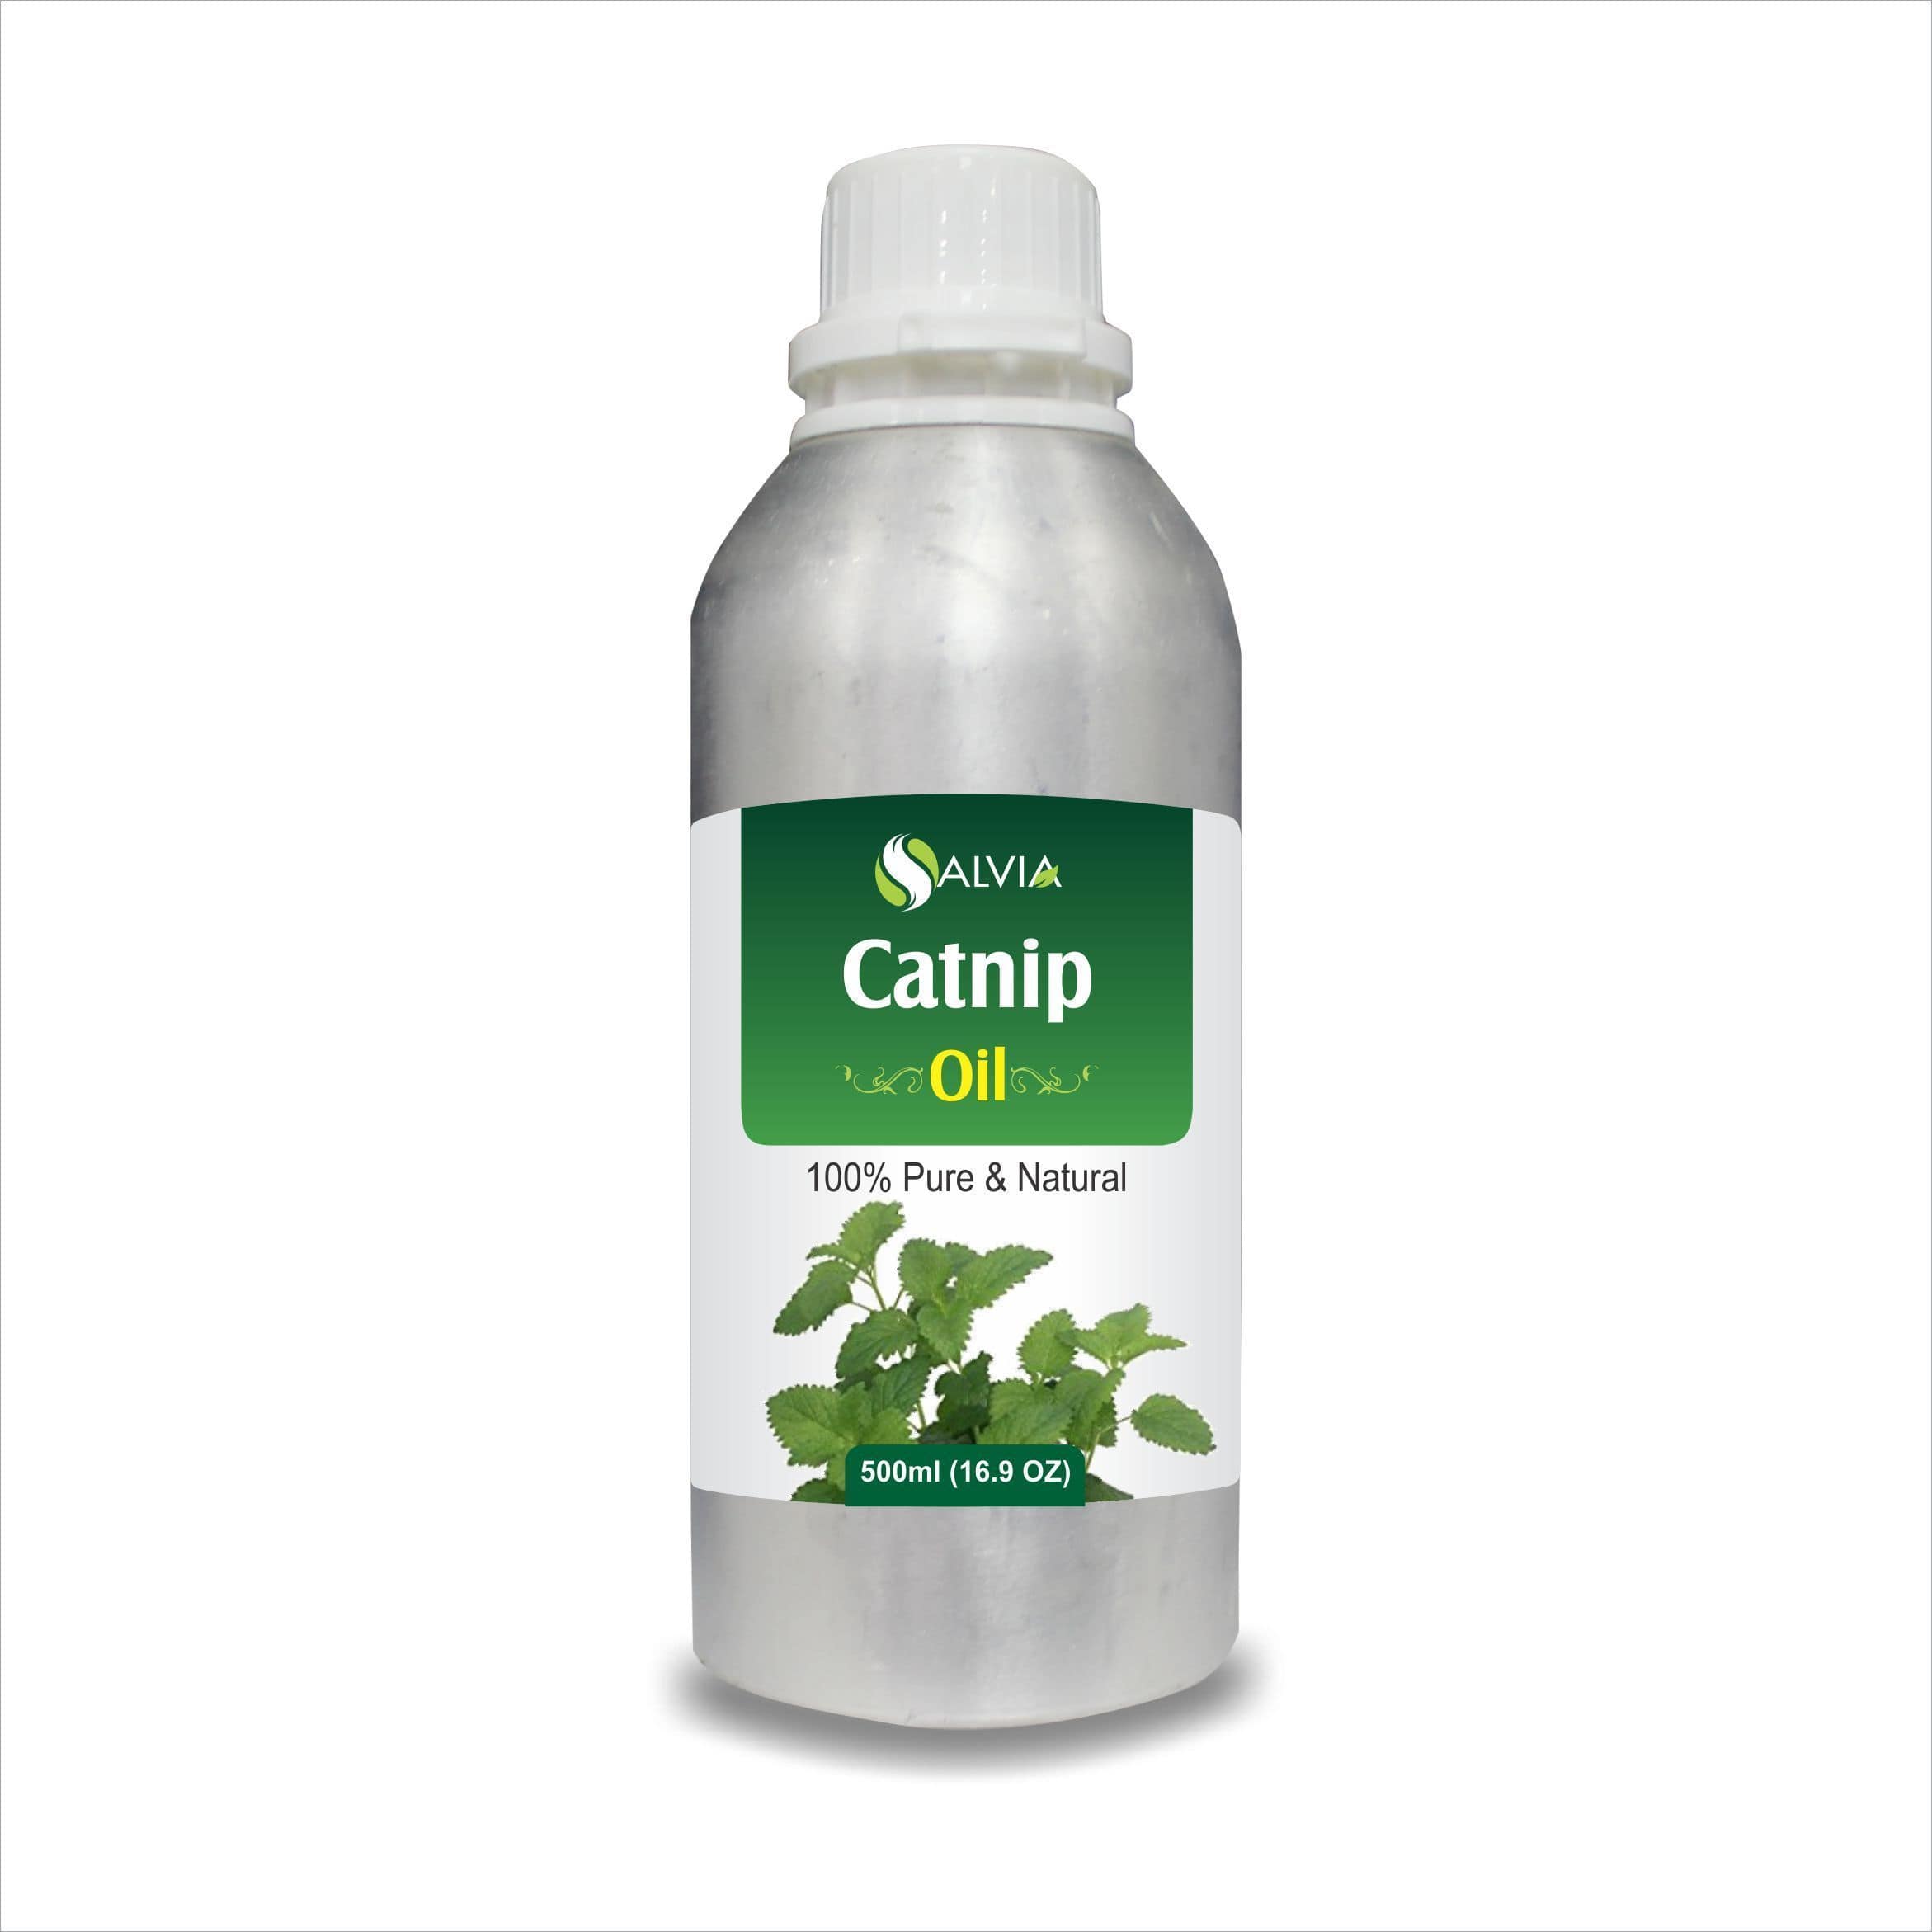 Catnip Oil benefits